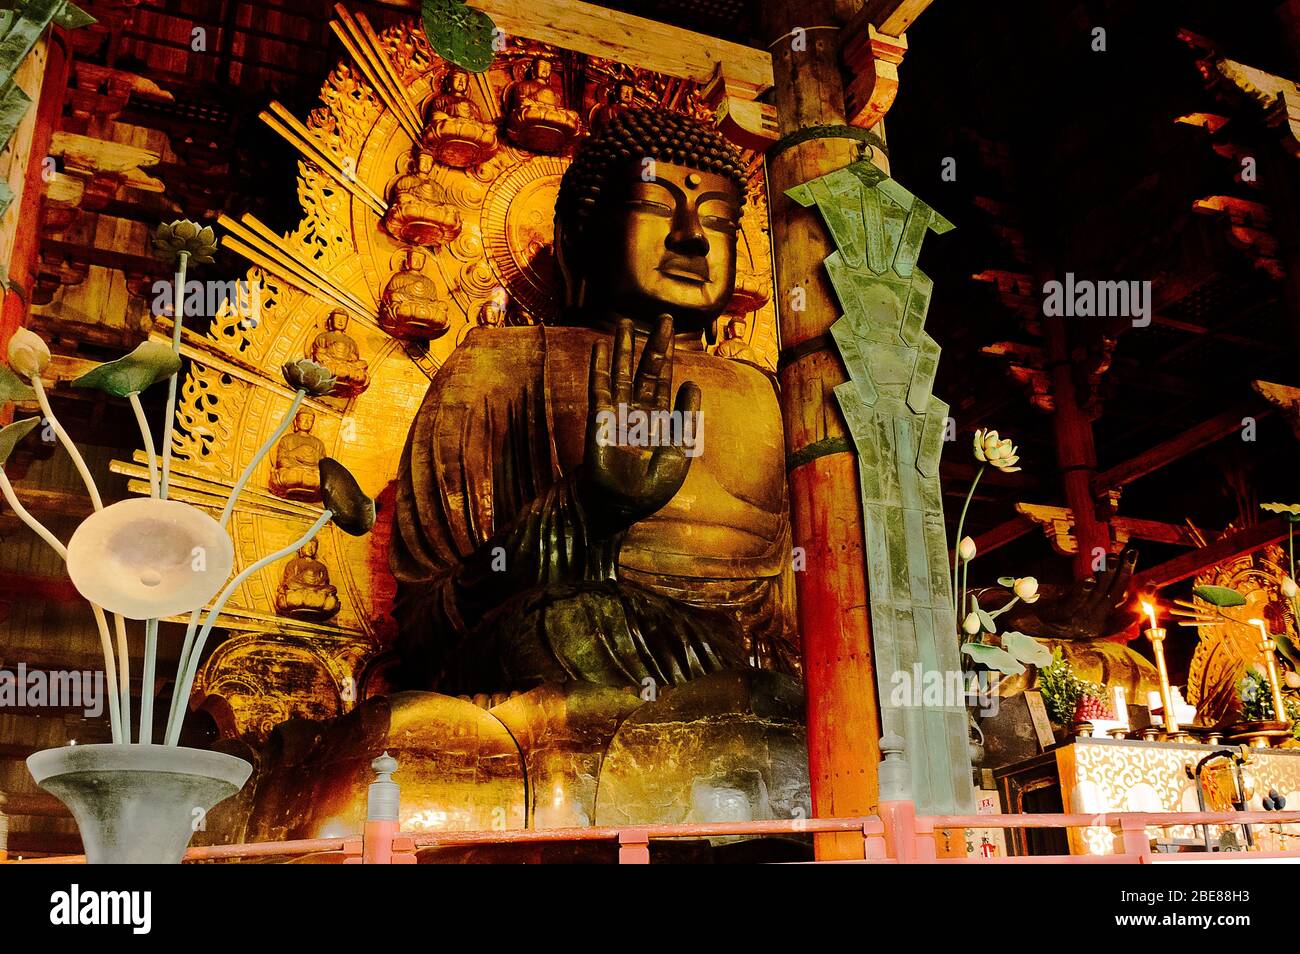 The Great Buddah in the Great Buddha Hall, Nara, Osaka, Japan Stock Photo